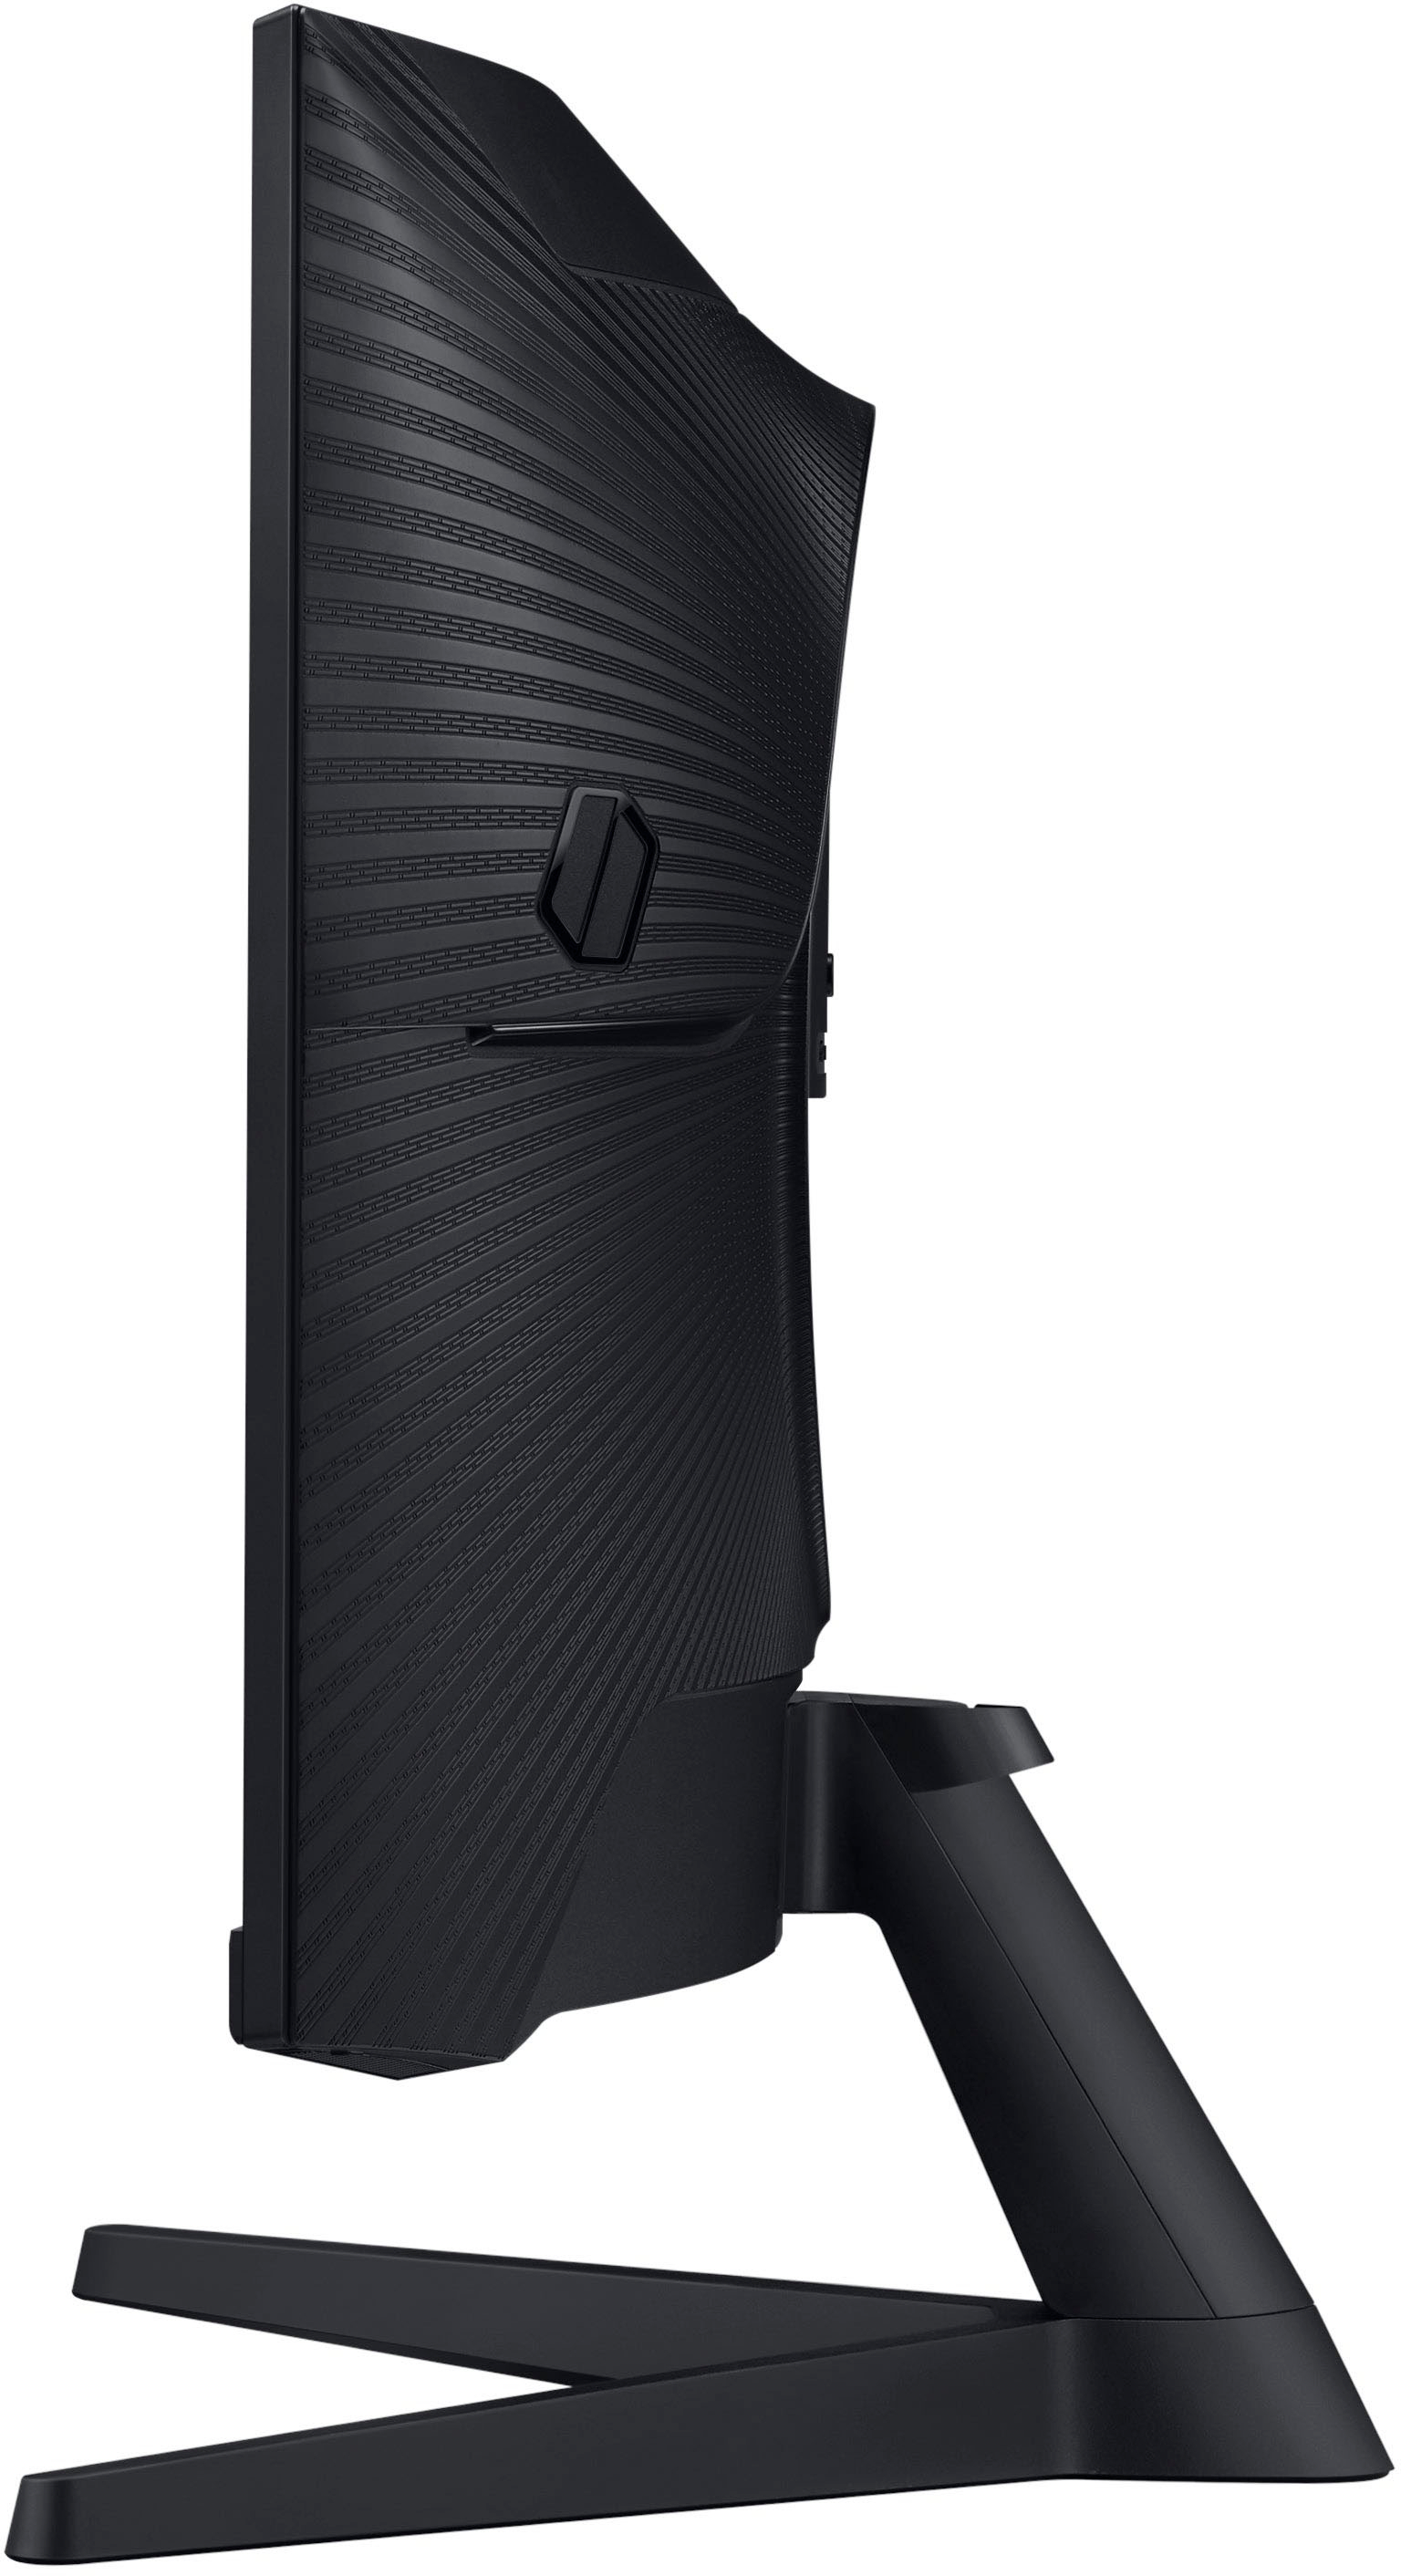 Ecran PC 27 Samsung Odyssey G5 - incurvé (1000R), 2560x1440p (QHD), HDR10,  Dalle VA, 144 Hz, 1 ms, FreeSync Premium –